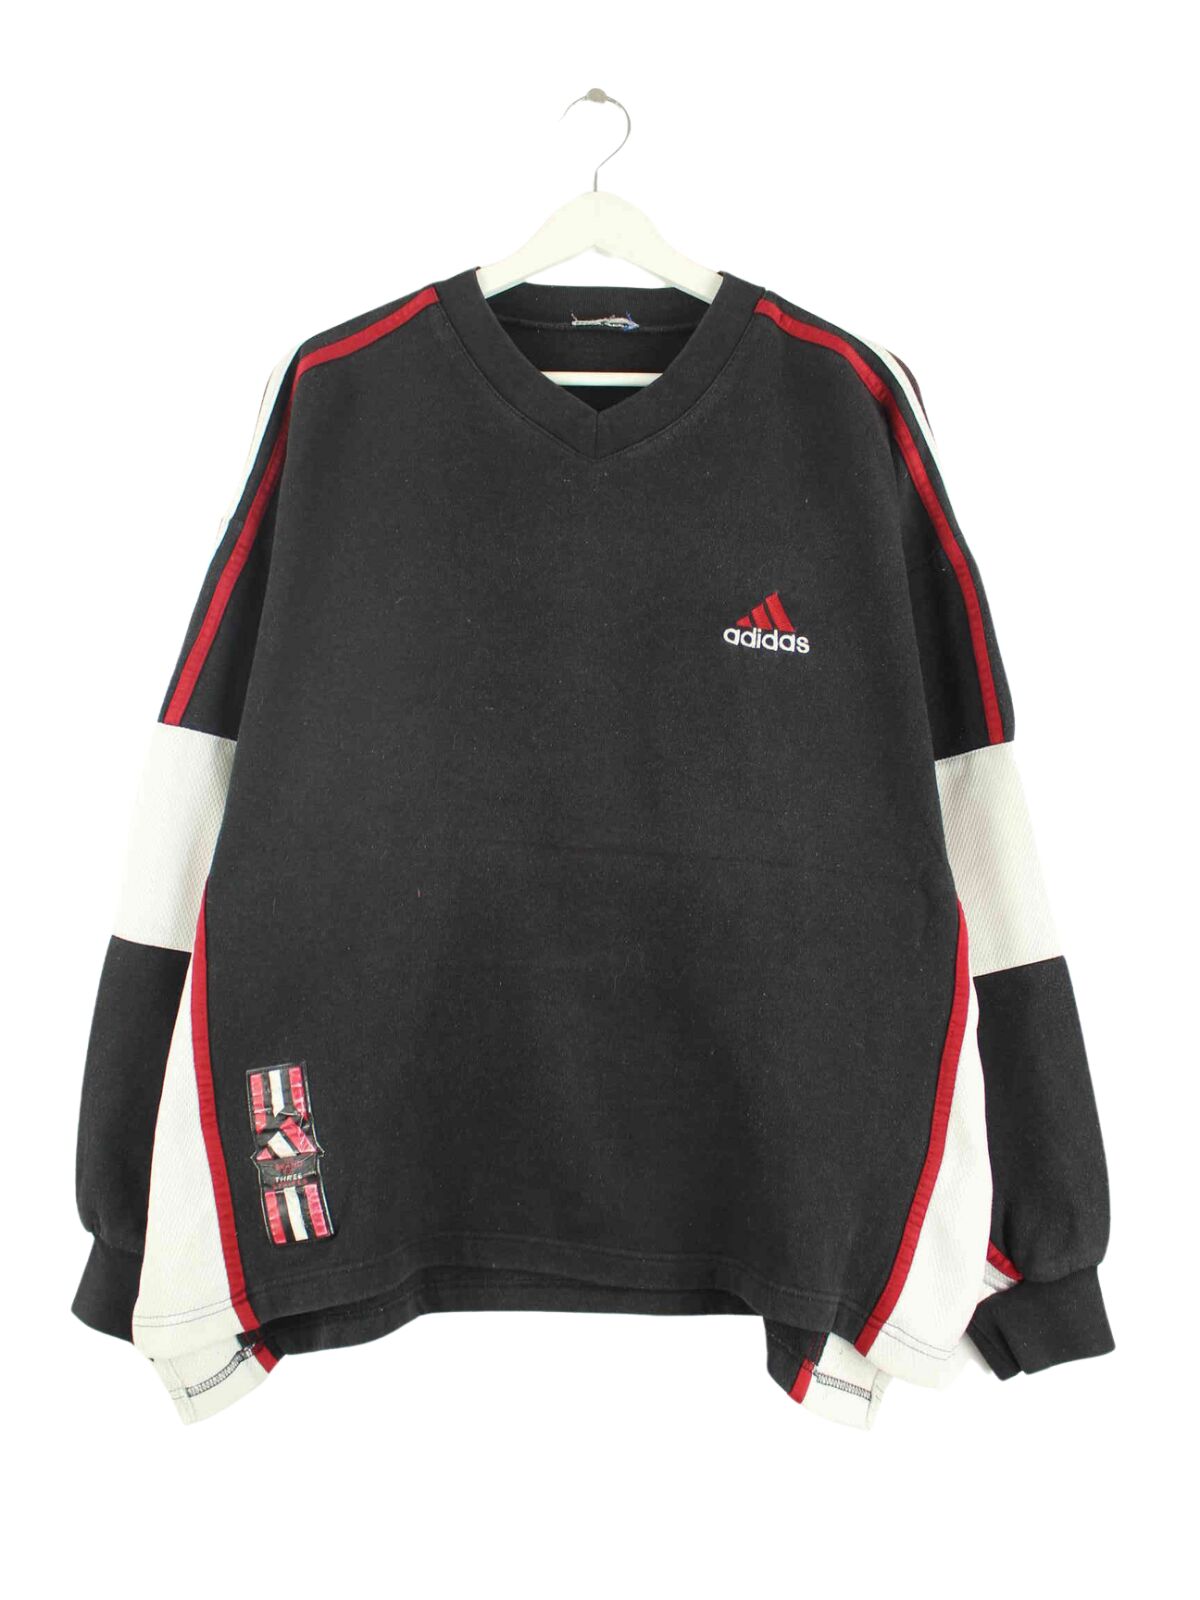 Adidas 90s Vintage Sweater Schwarz XL (front image)